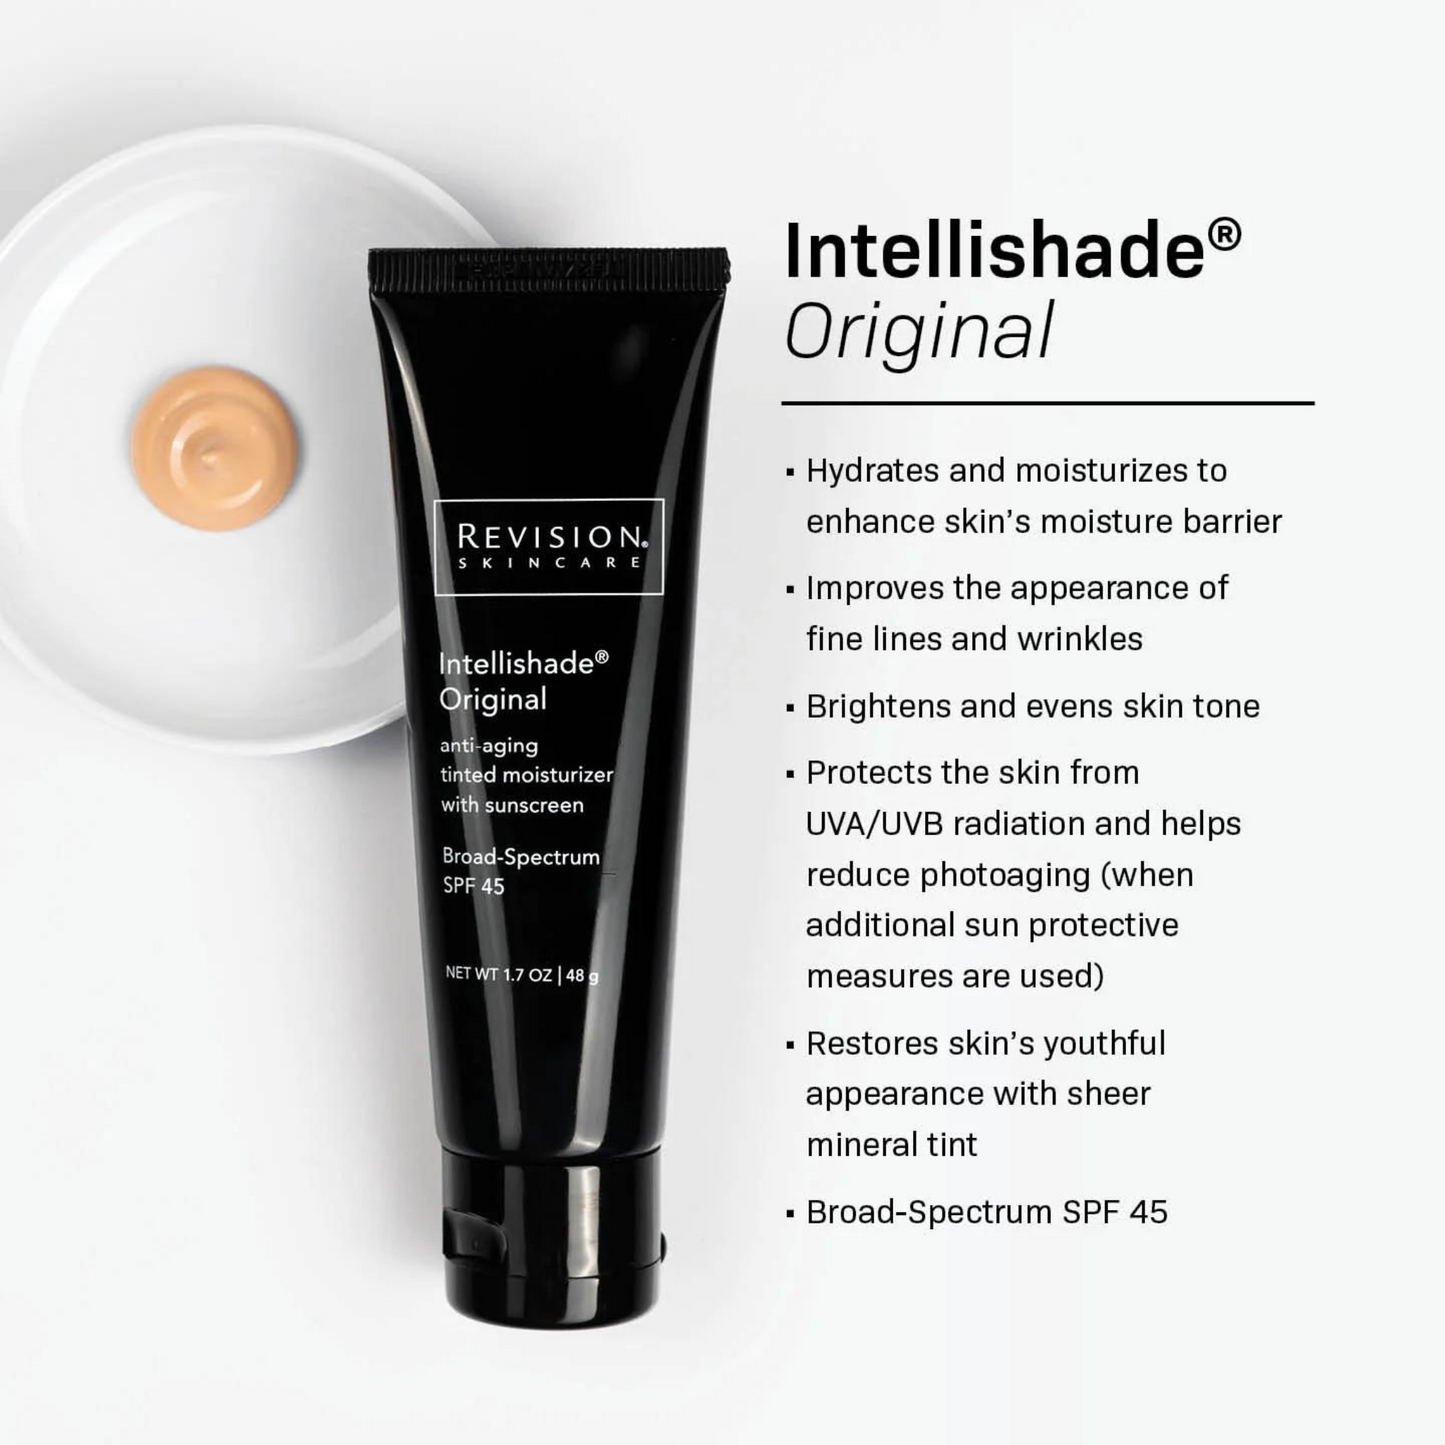 Intellishade® Original | Revision Skincare